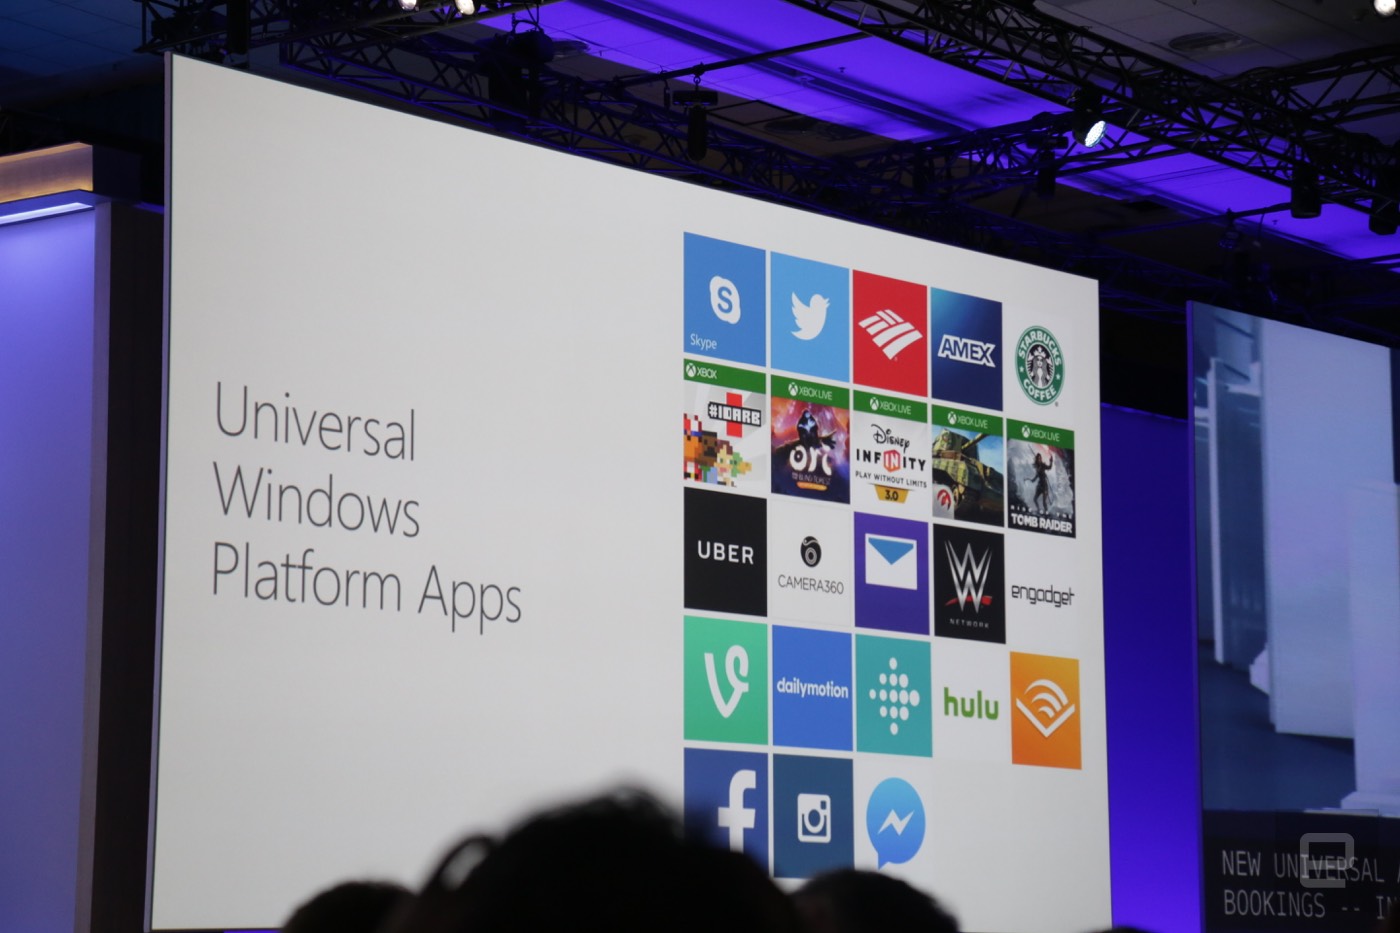 New Universal Windows apps include Facebook, Instagram